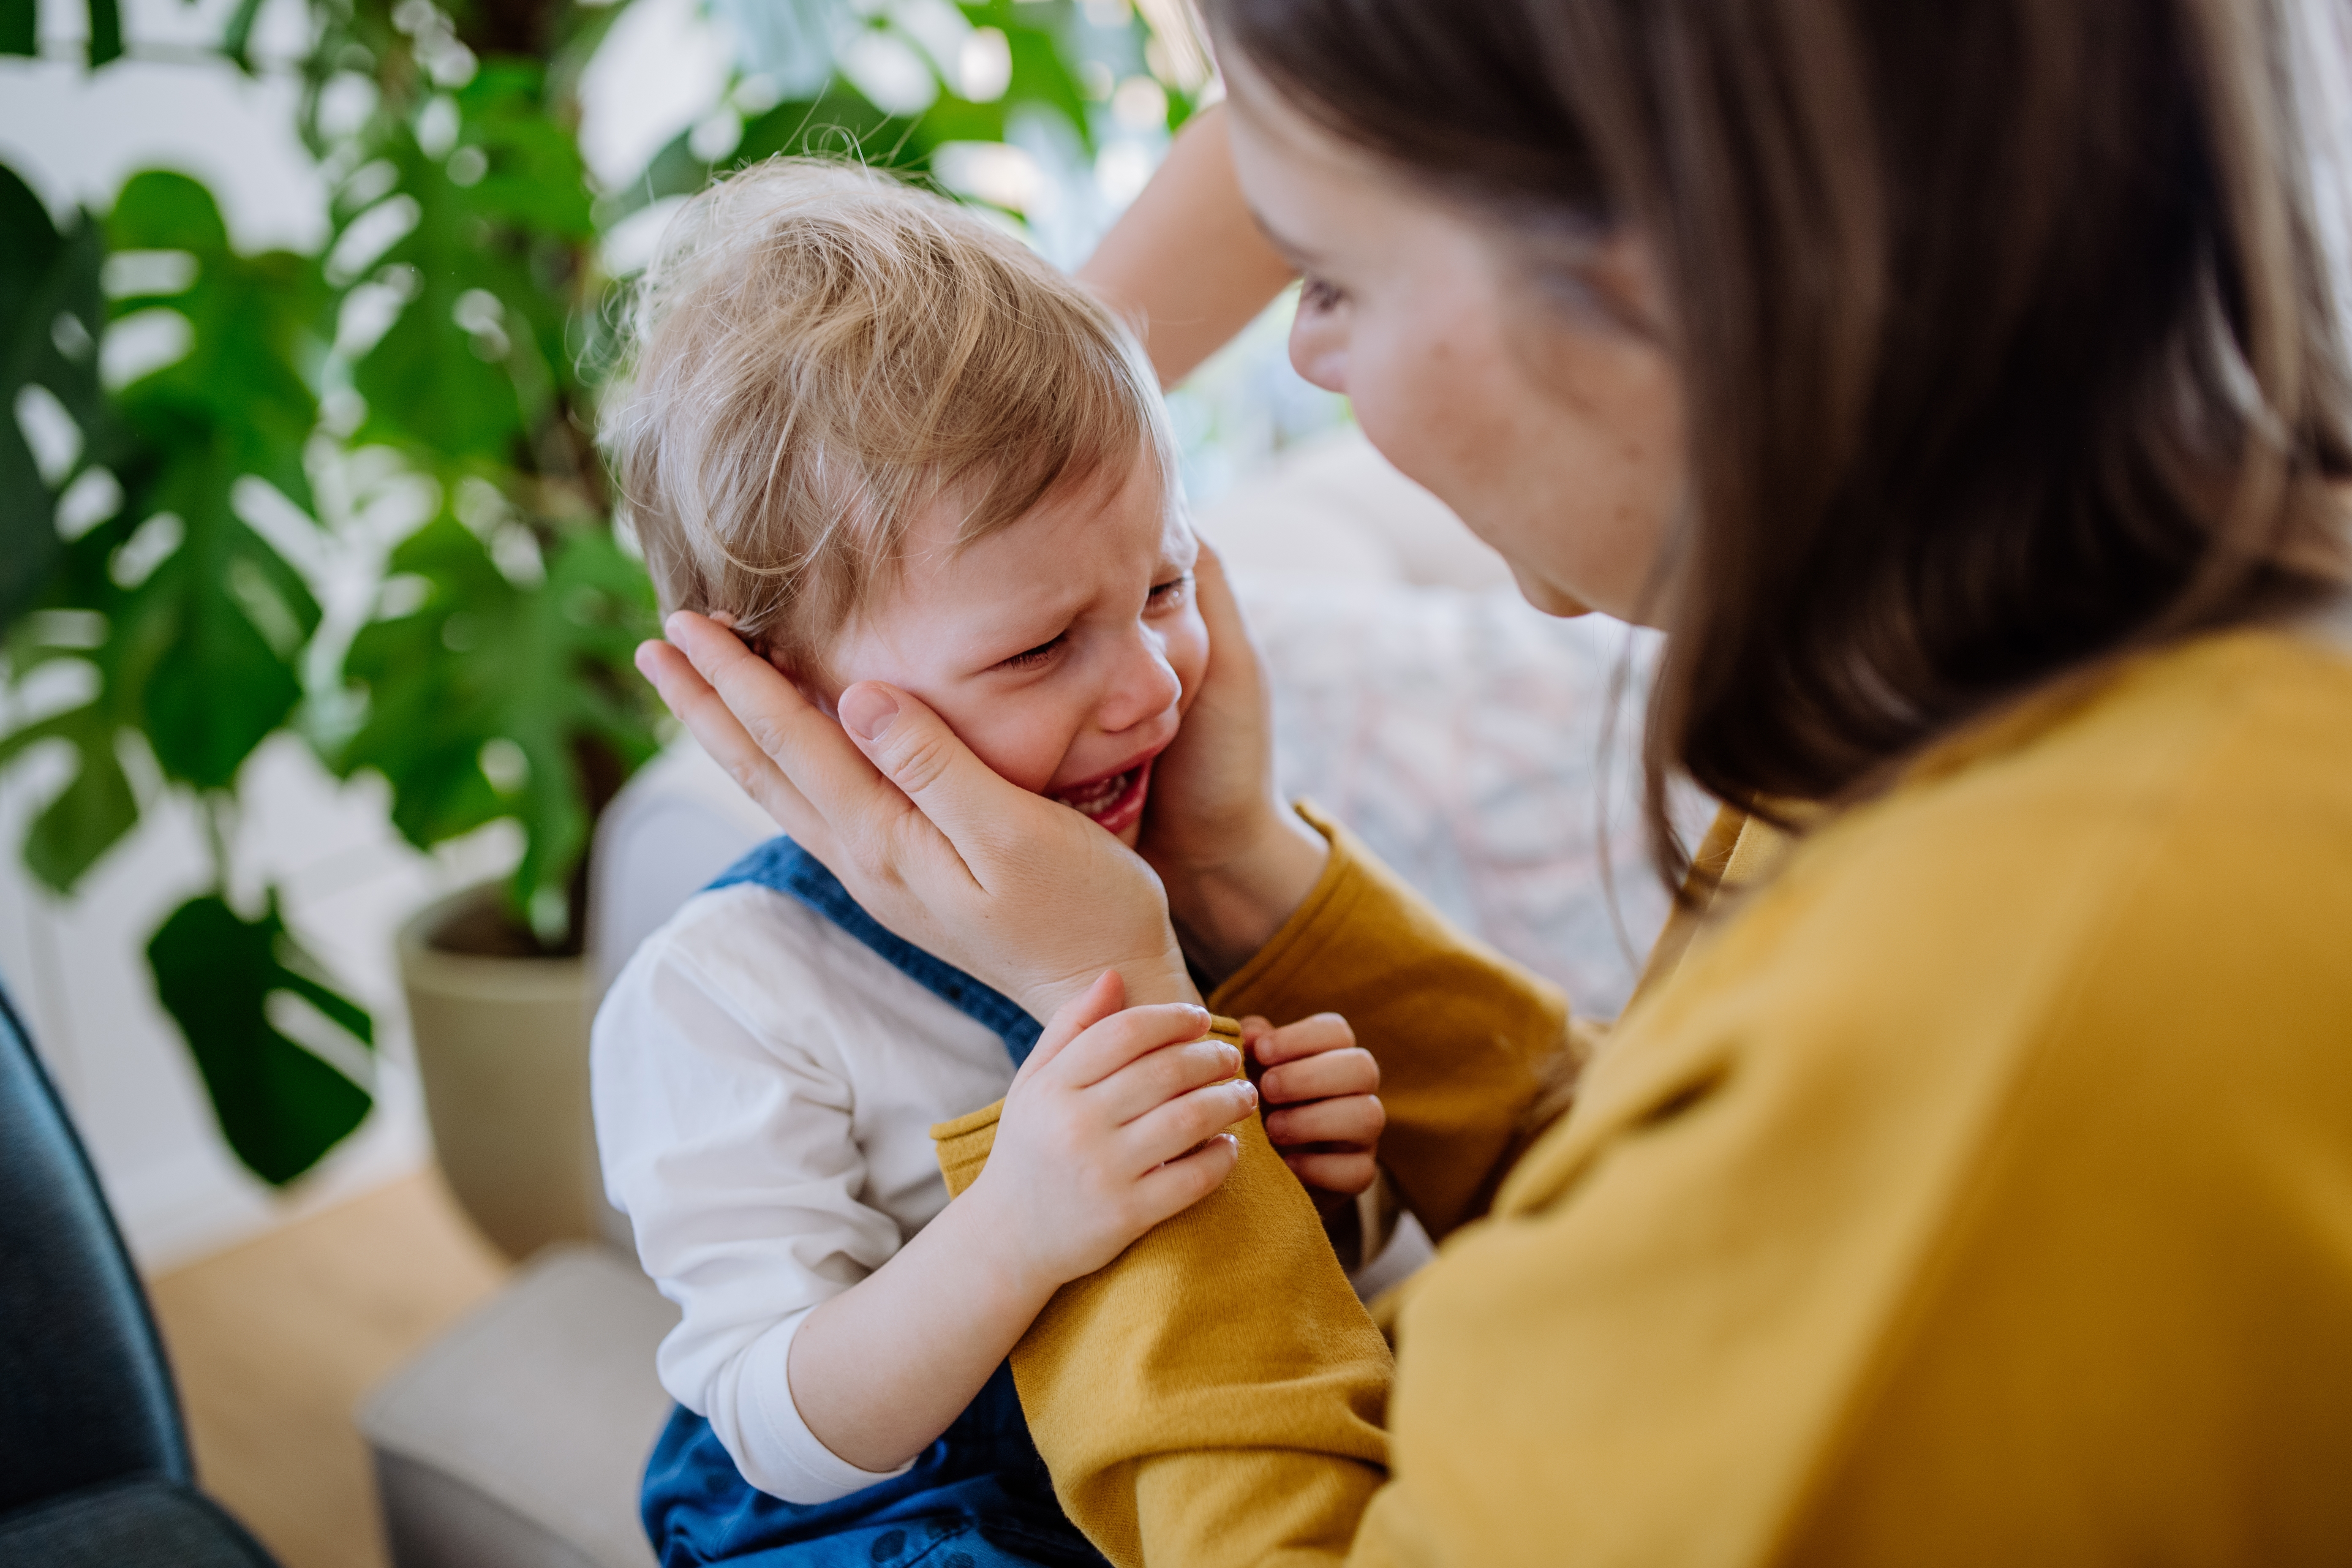 Una mujer consolando a un niño que llora. | Foto: Shutterstock